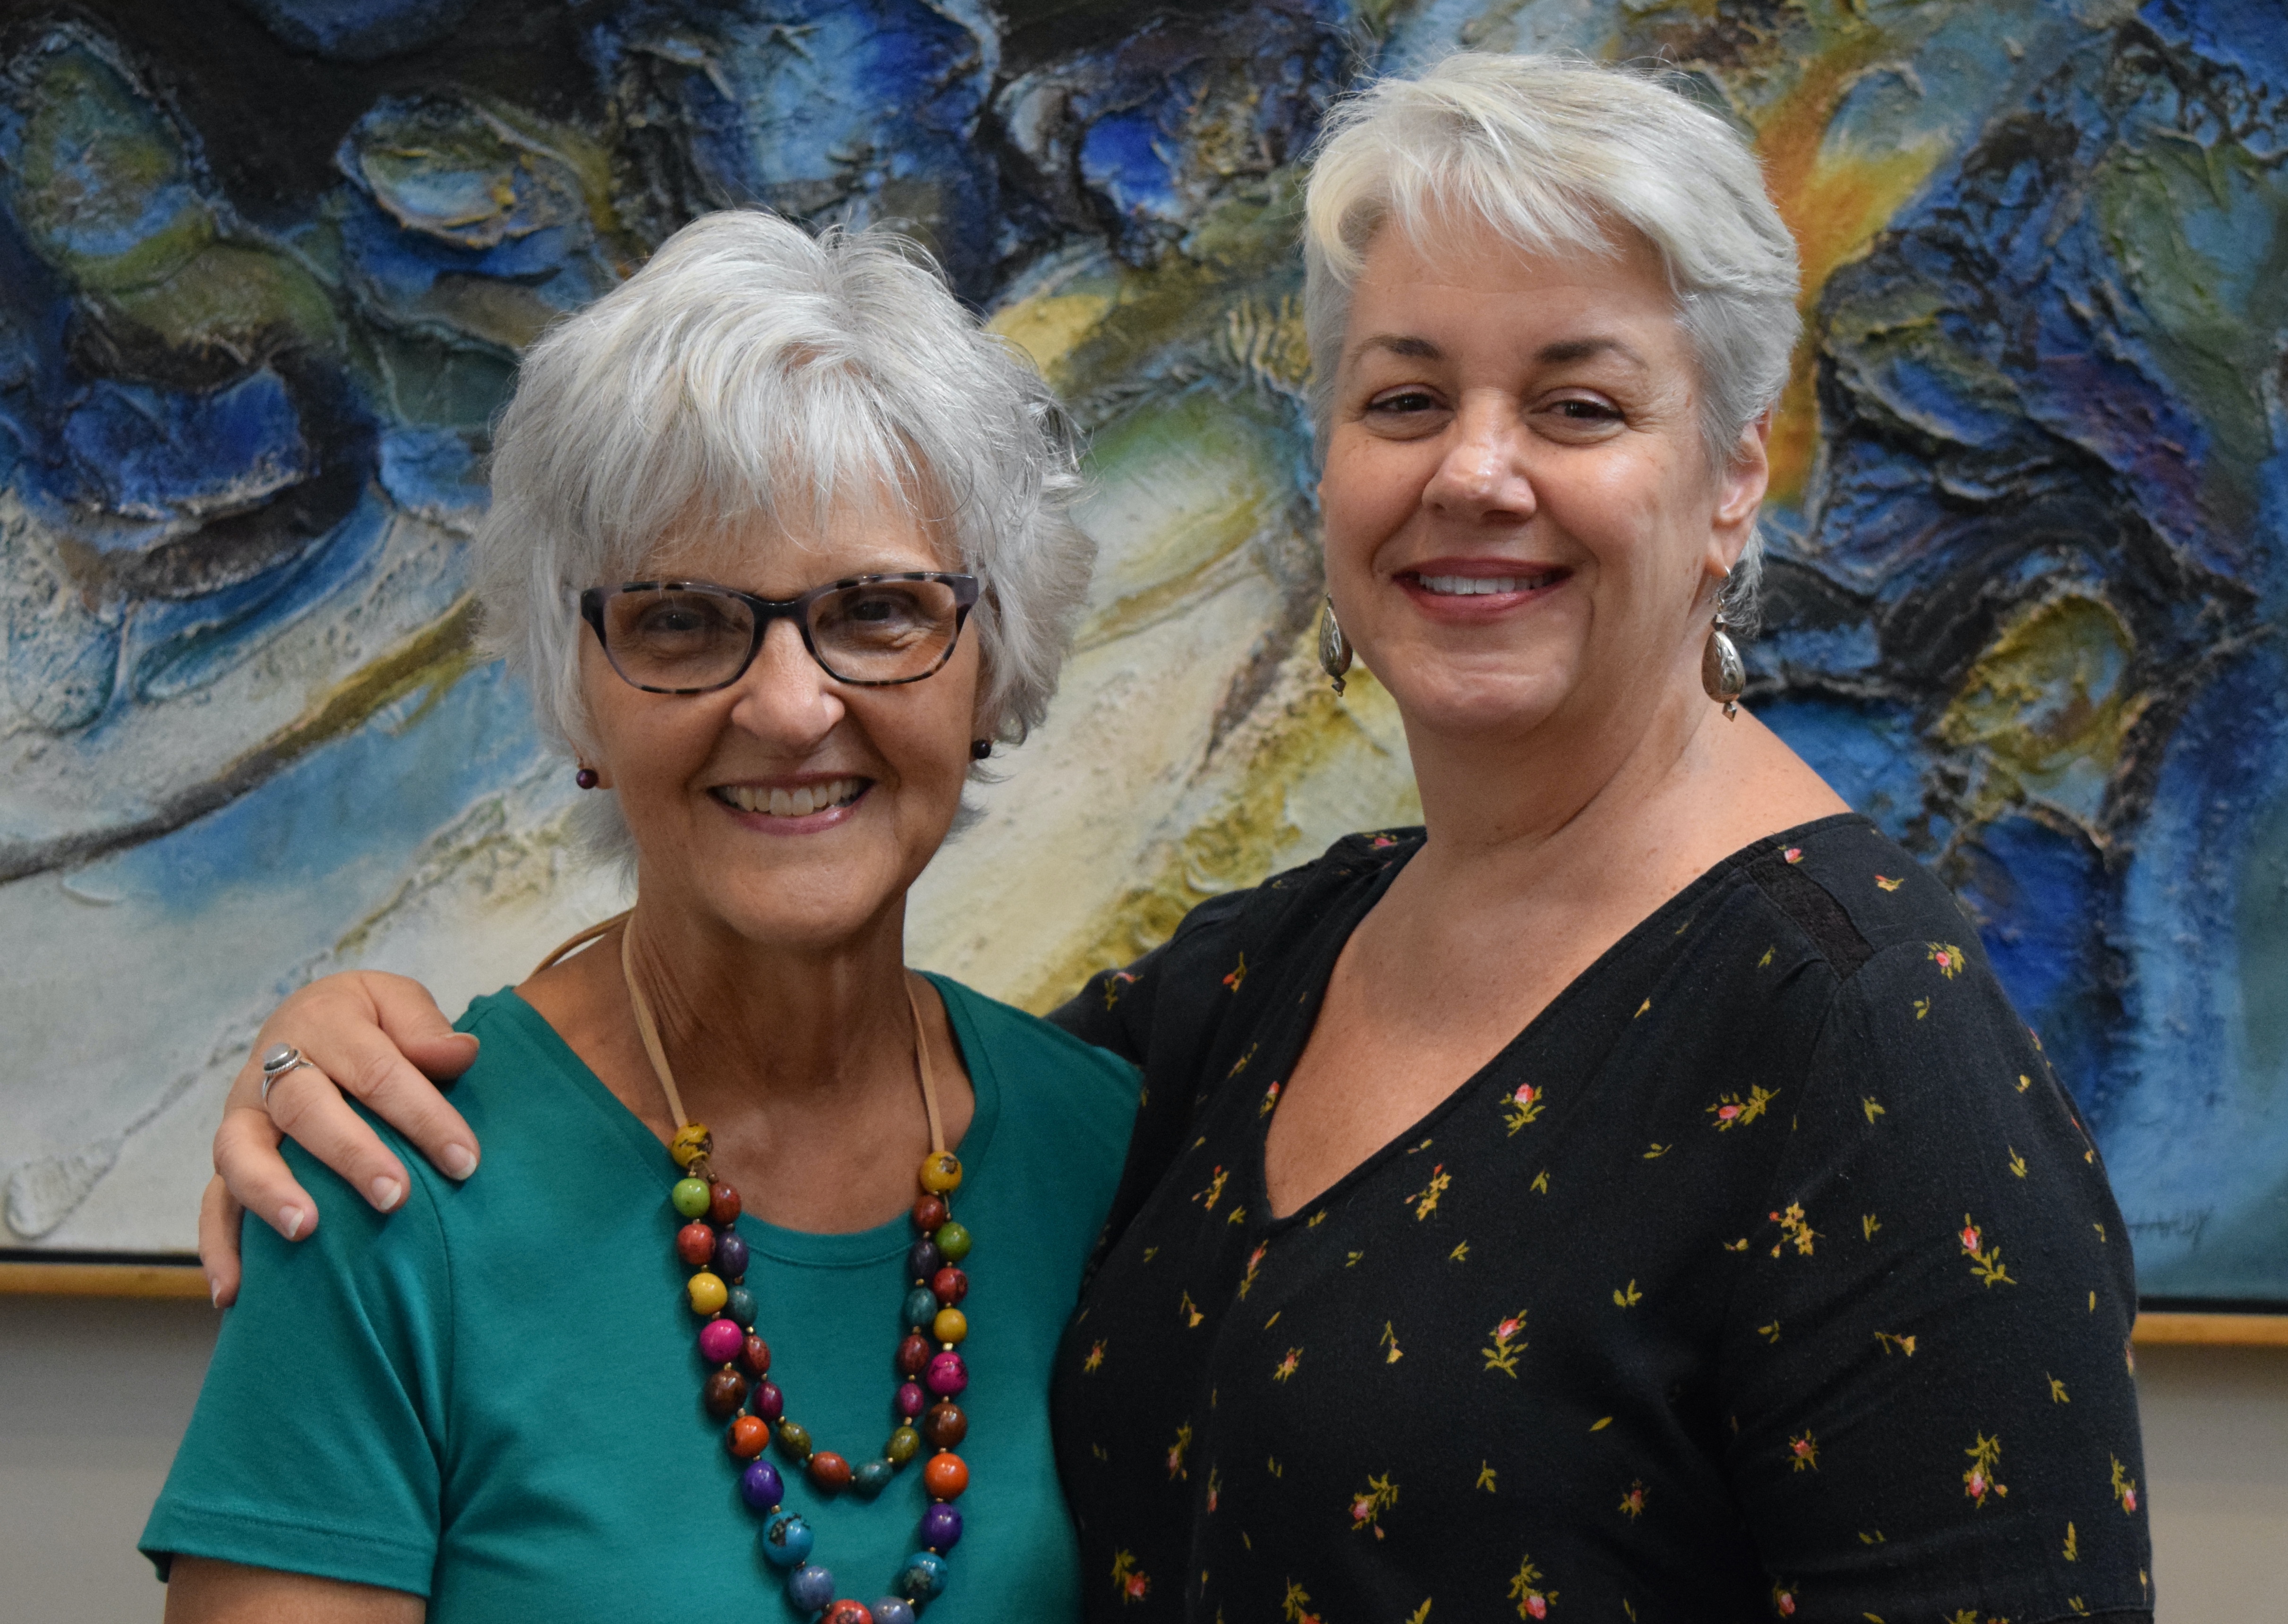 Parish Nurse Carol Cherry and Social Worker Kathryn West are part of the Caring Ministries team at Bryn Mawr Presbyterian Church